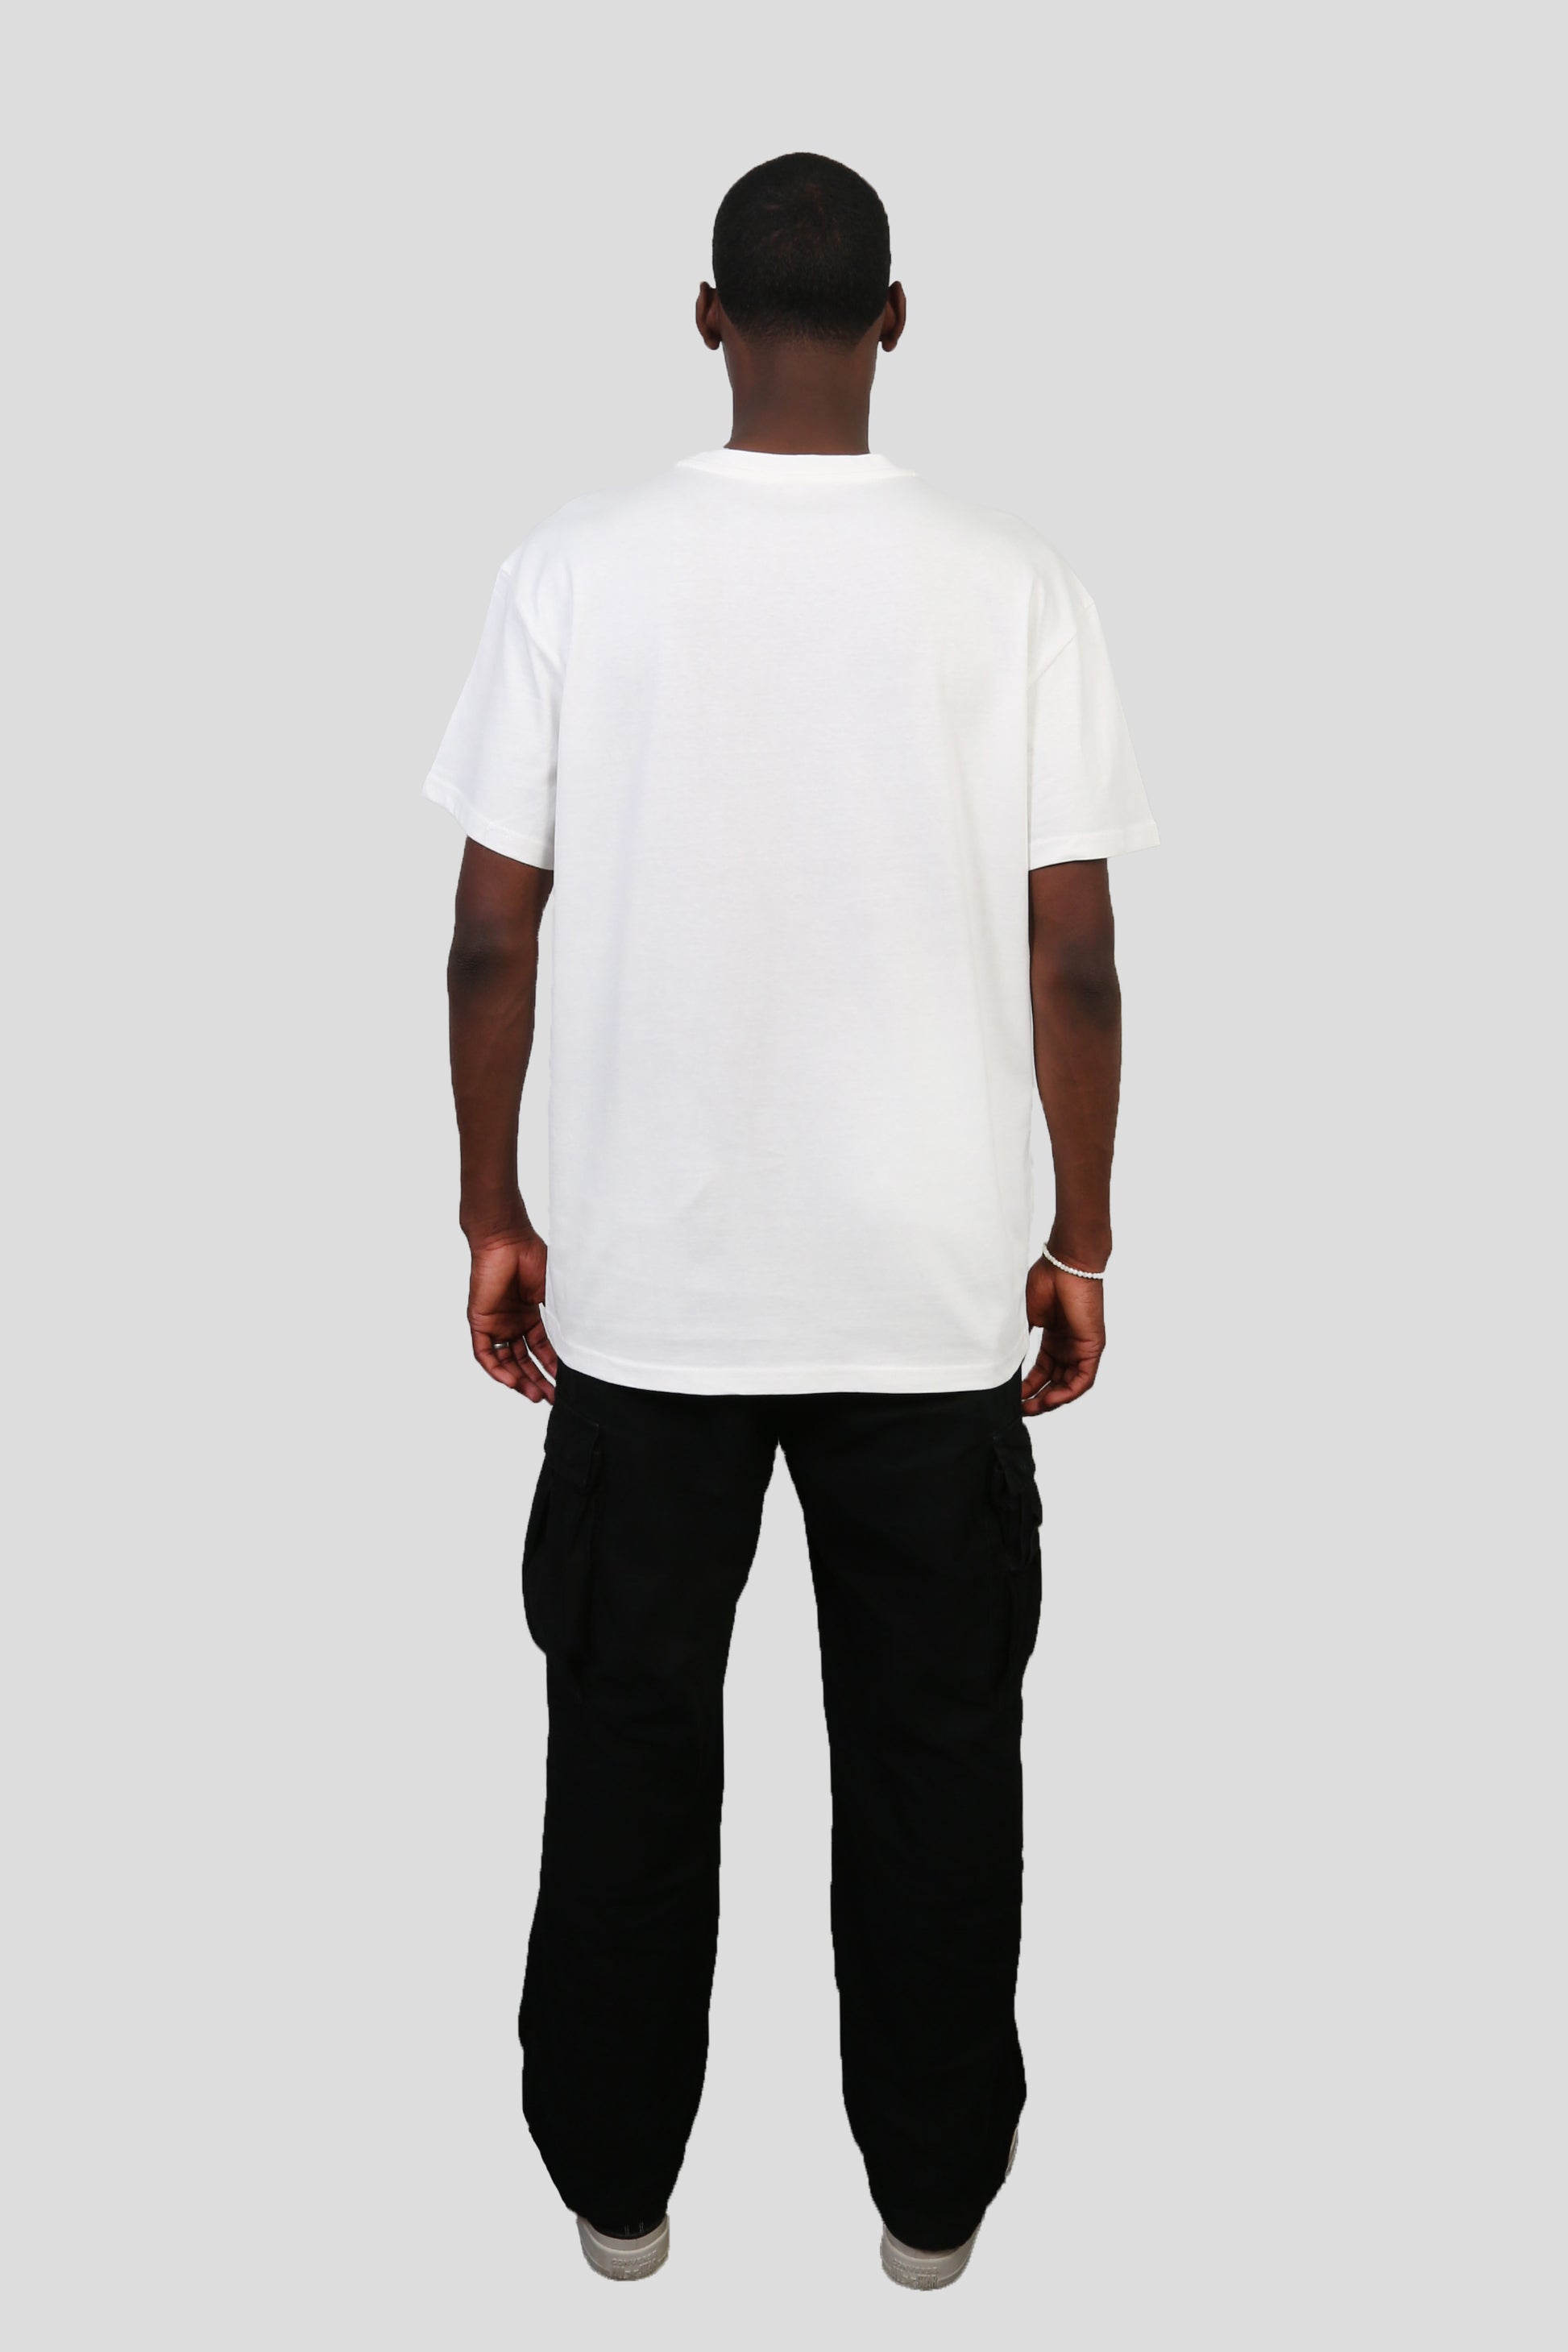 www.ninetyninestudios.de| AKHIRAH T-SHIRT WHITE| T-Shirt | €34.99 | Revolutionary Islamic Streetwear | 99Studios